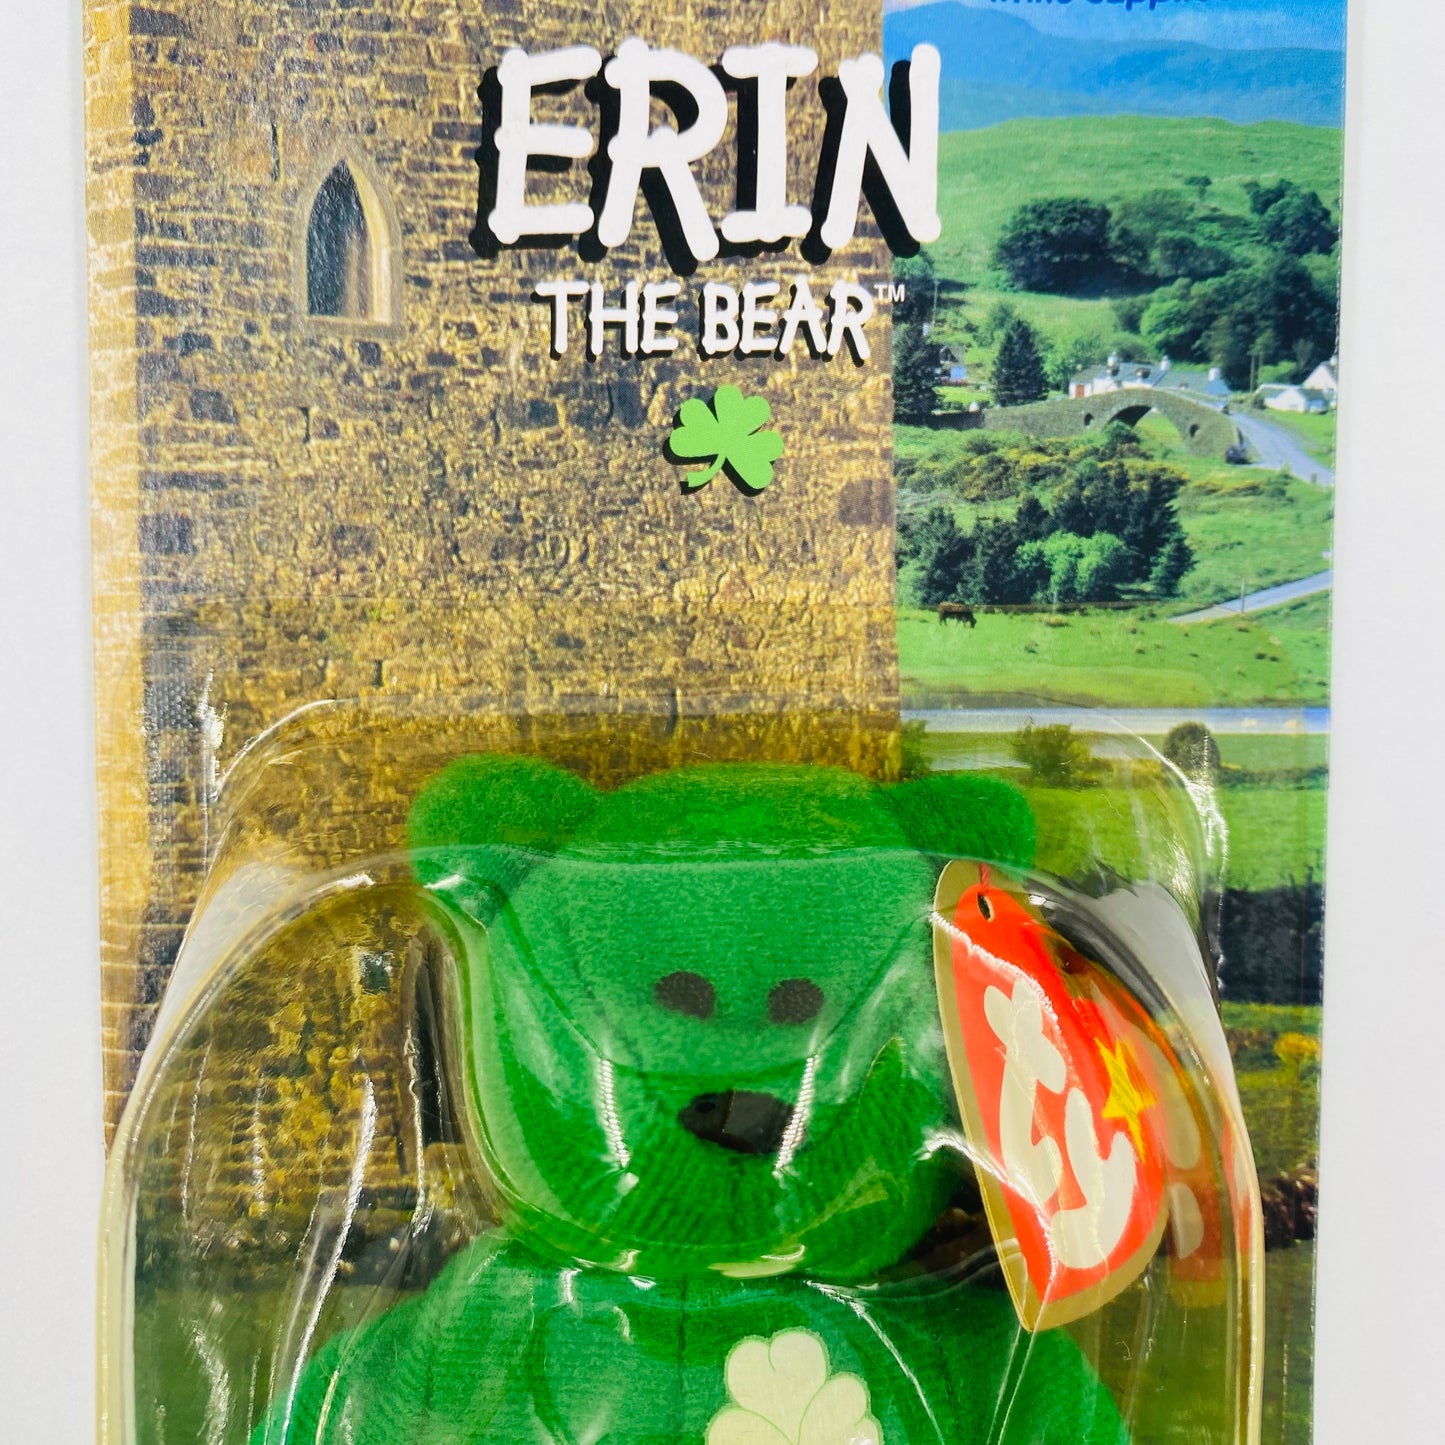 Teenie Beanie Babies International Bears Erin the Irish Bear McDonald's Happy Meal bean bag plush toy animal (1999) carded